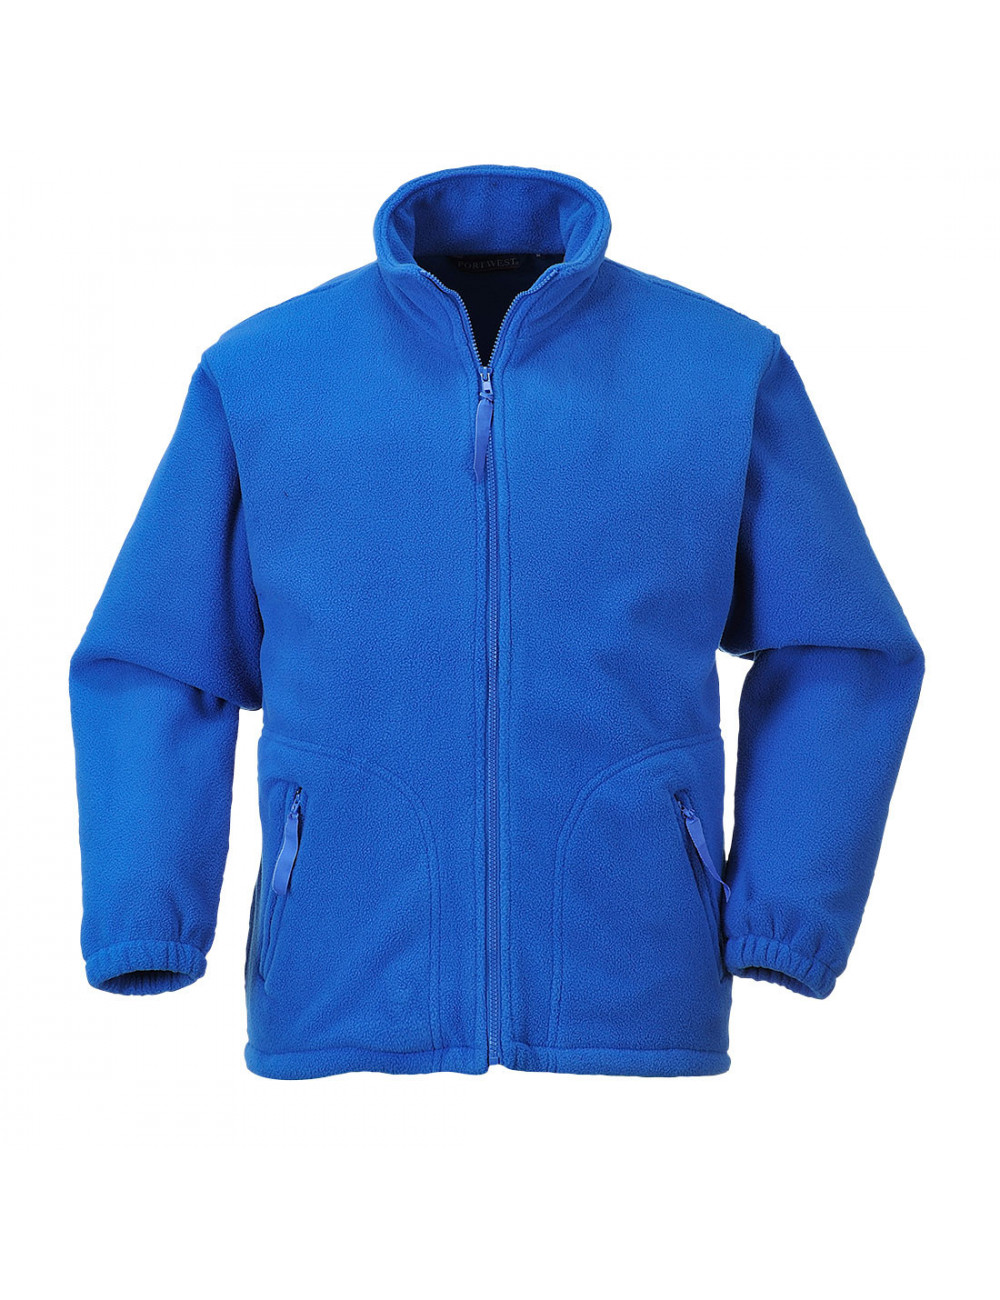 Polar fleece sweatshirt argyll royal blue Portwest